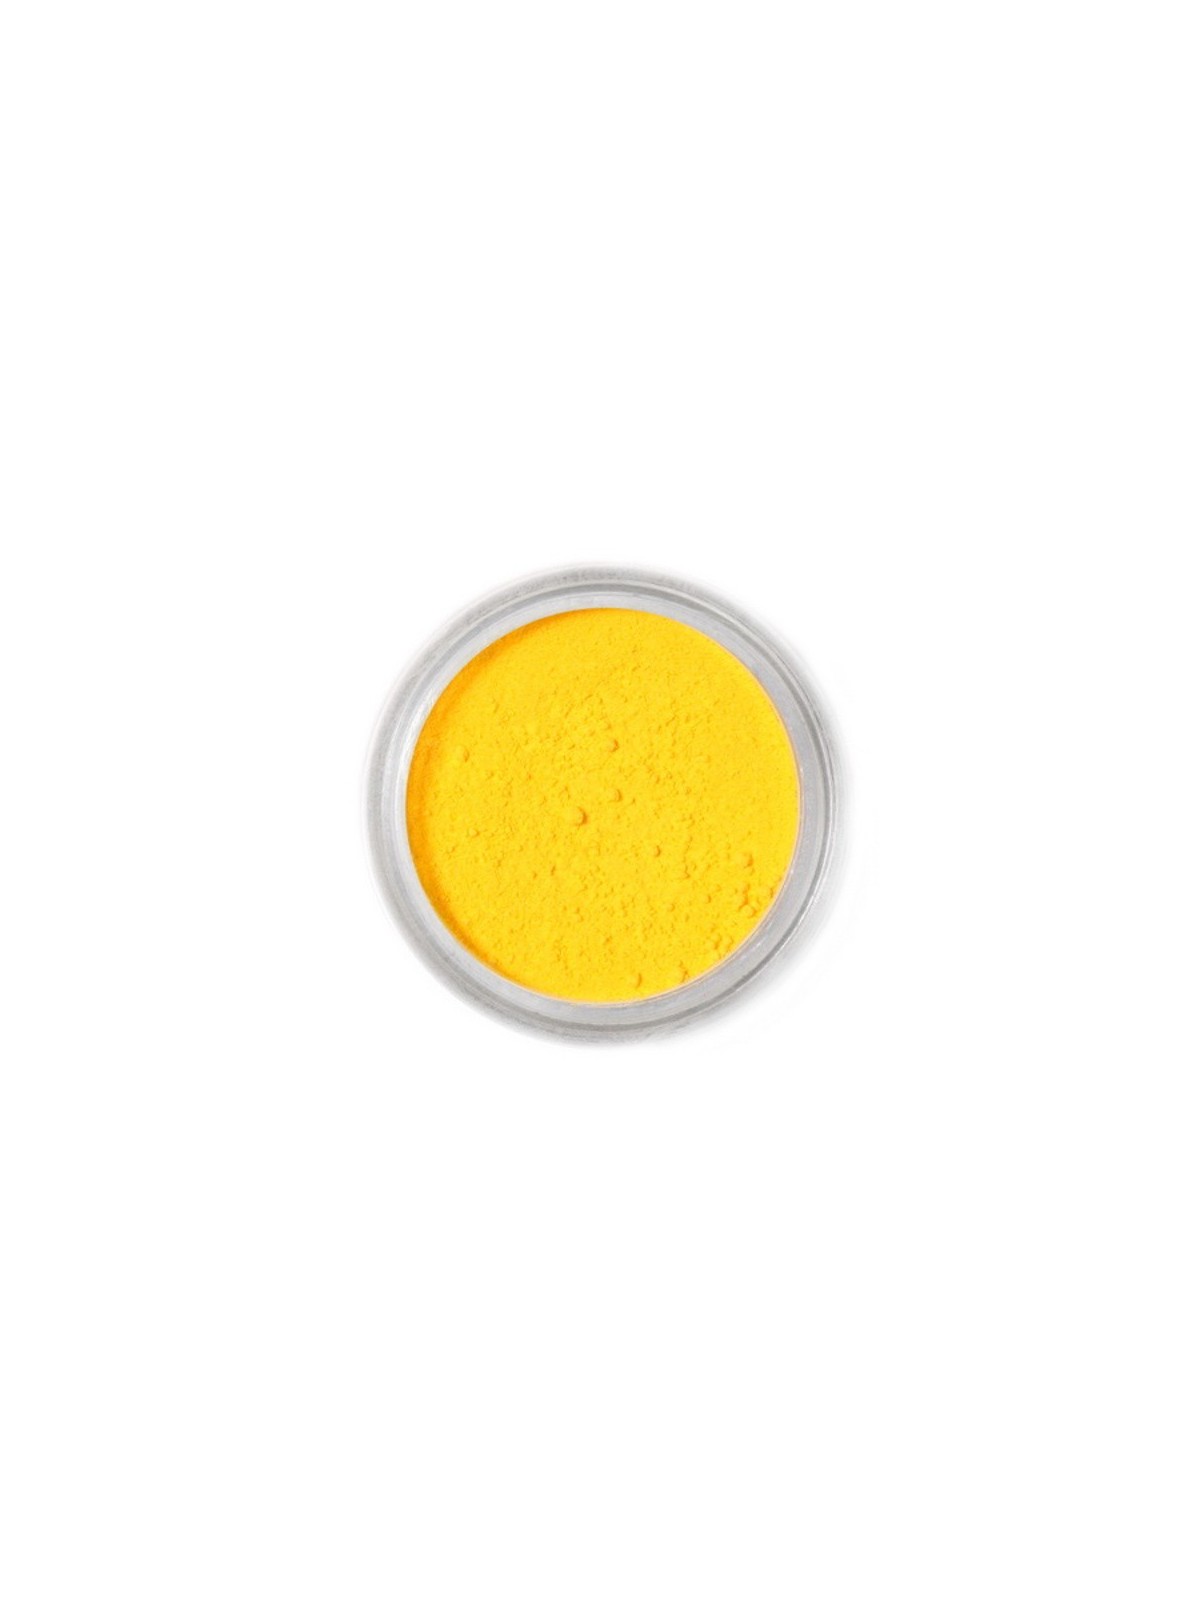 Jedlá prachová farba Fractal - Canary Yellow, Kanar sárga (2,5 g)